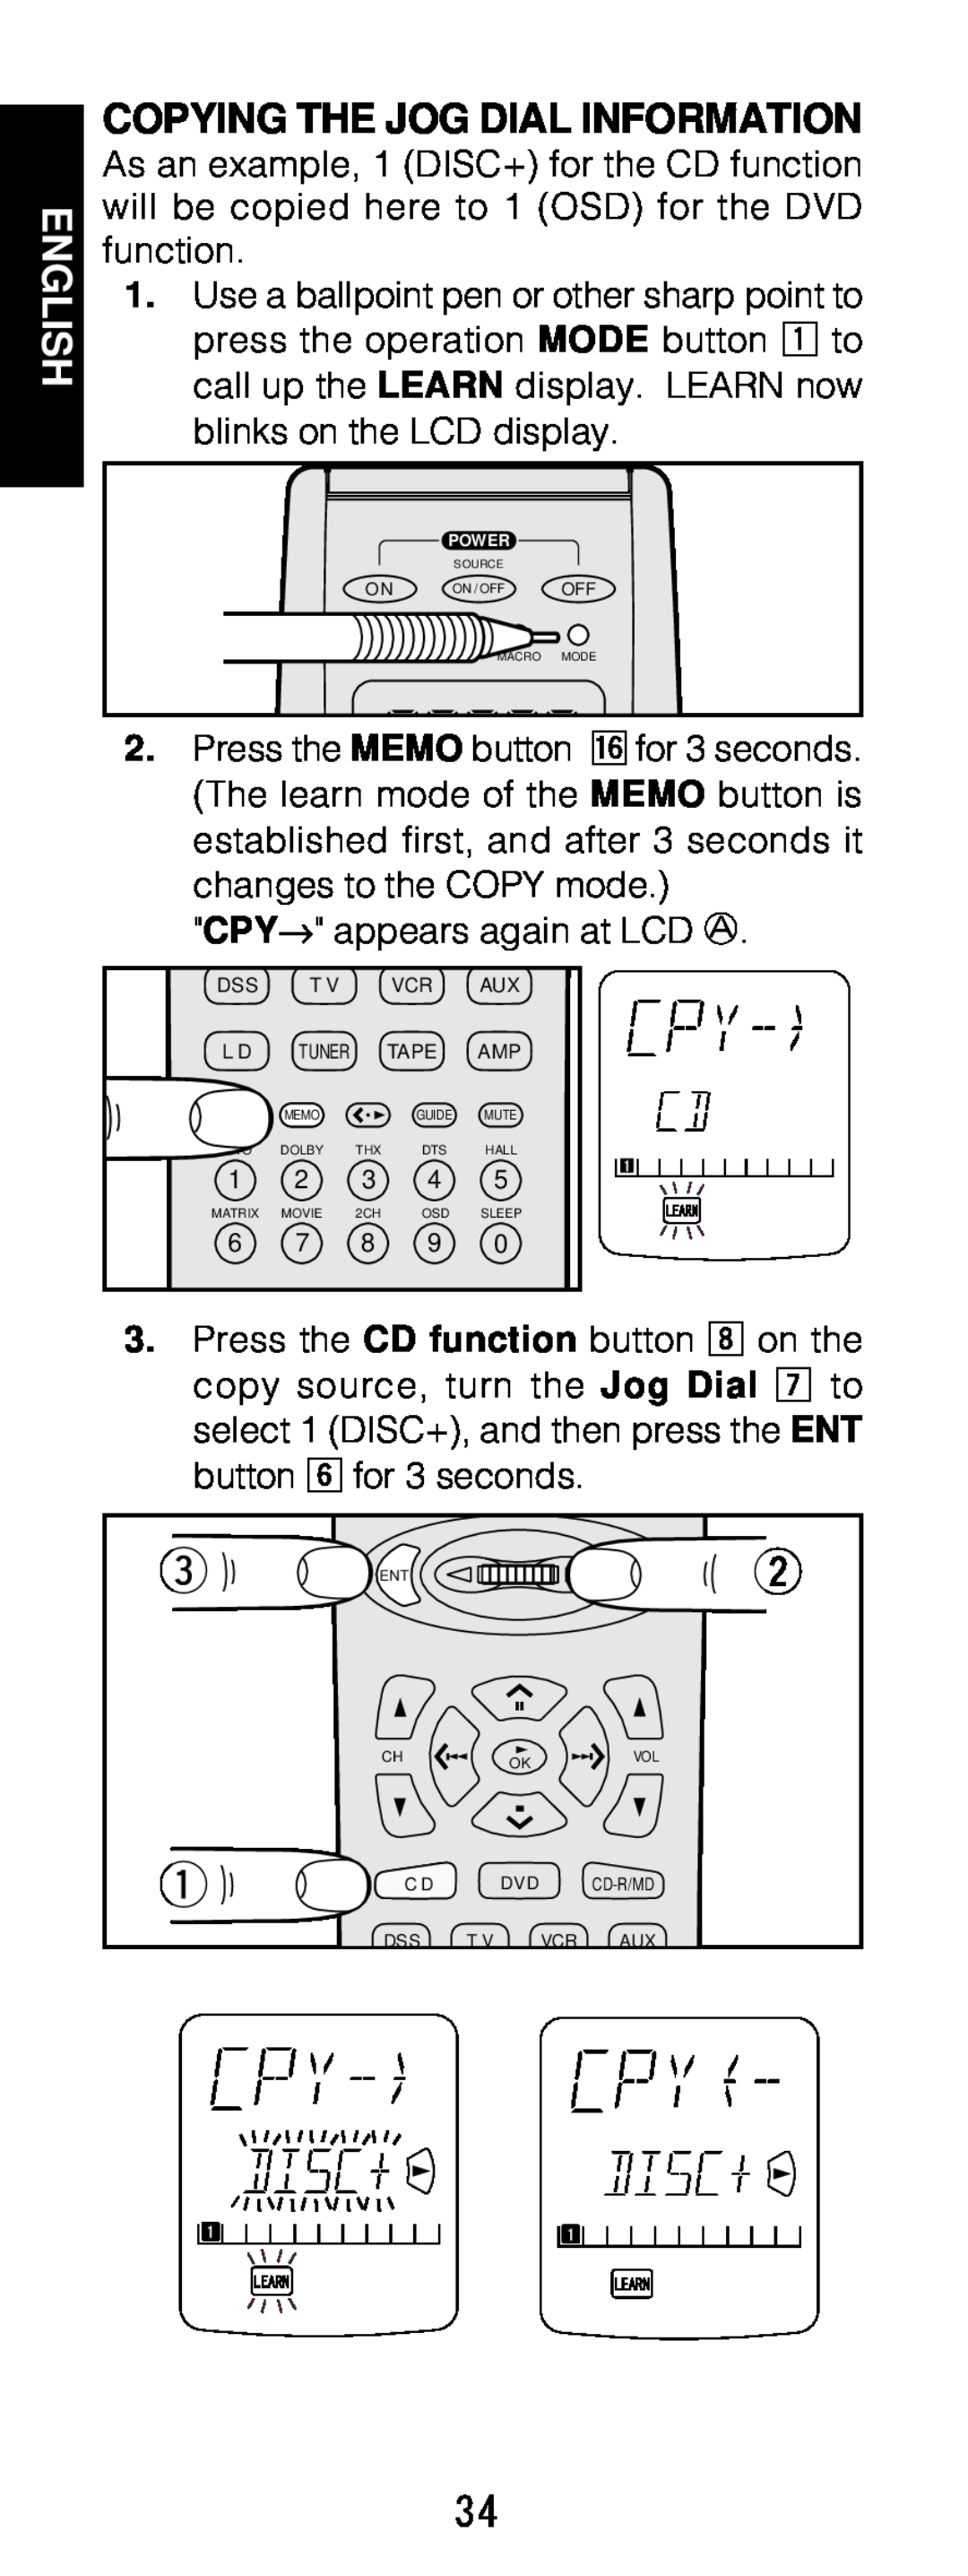 Marantz RC1200 manual Copying The Jog Dial Information, English 